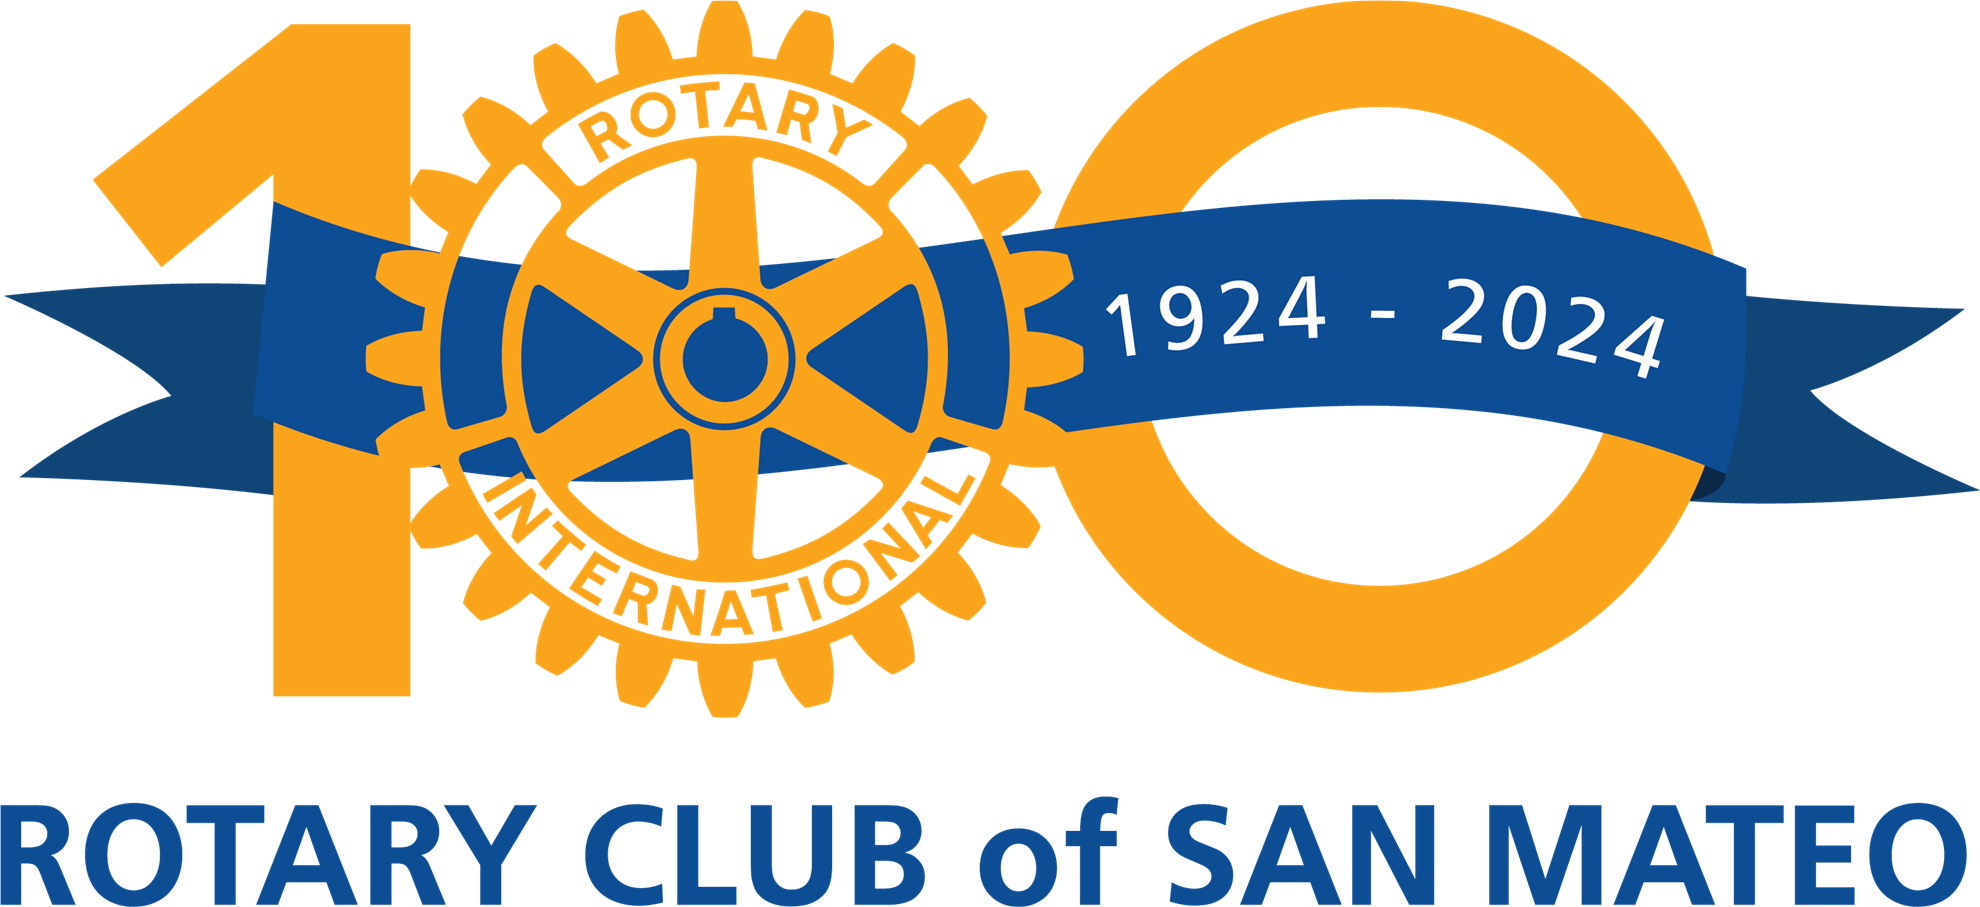 rotary international vector logo | designway4u | Rotary international,  Vector logo, Rotary international logo